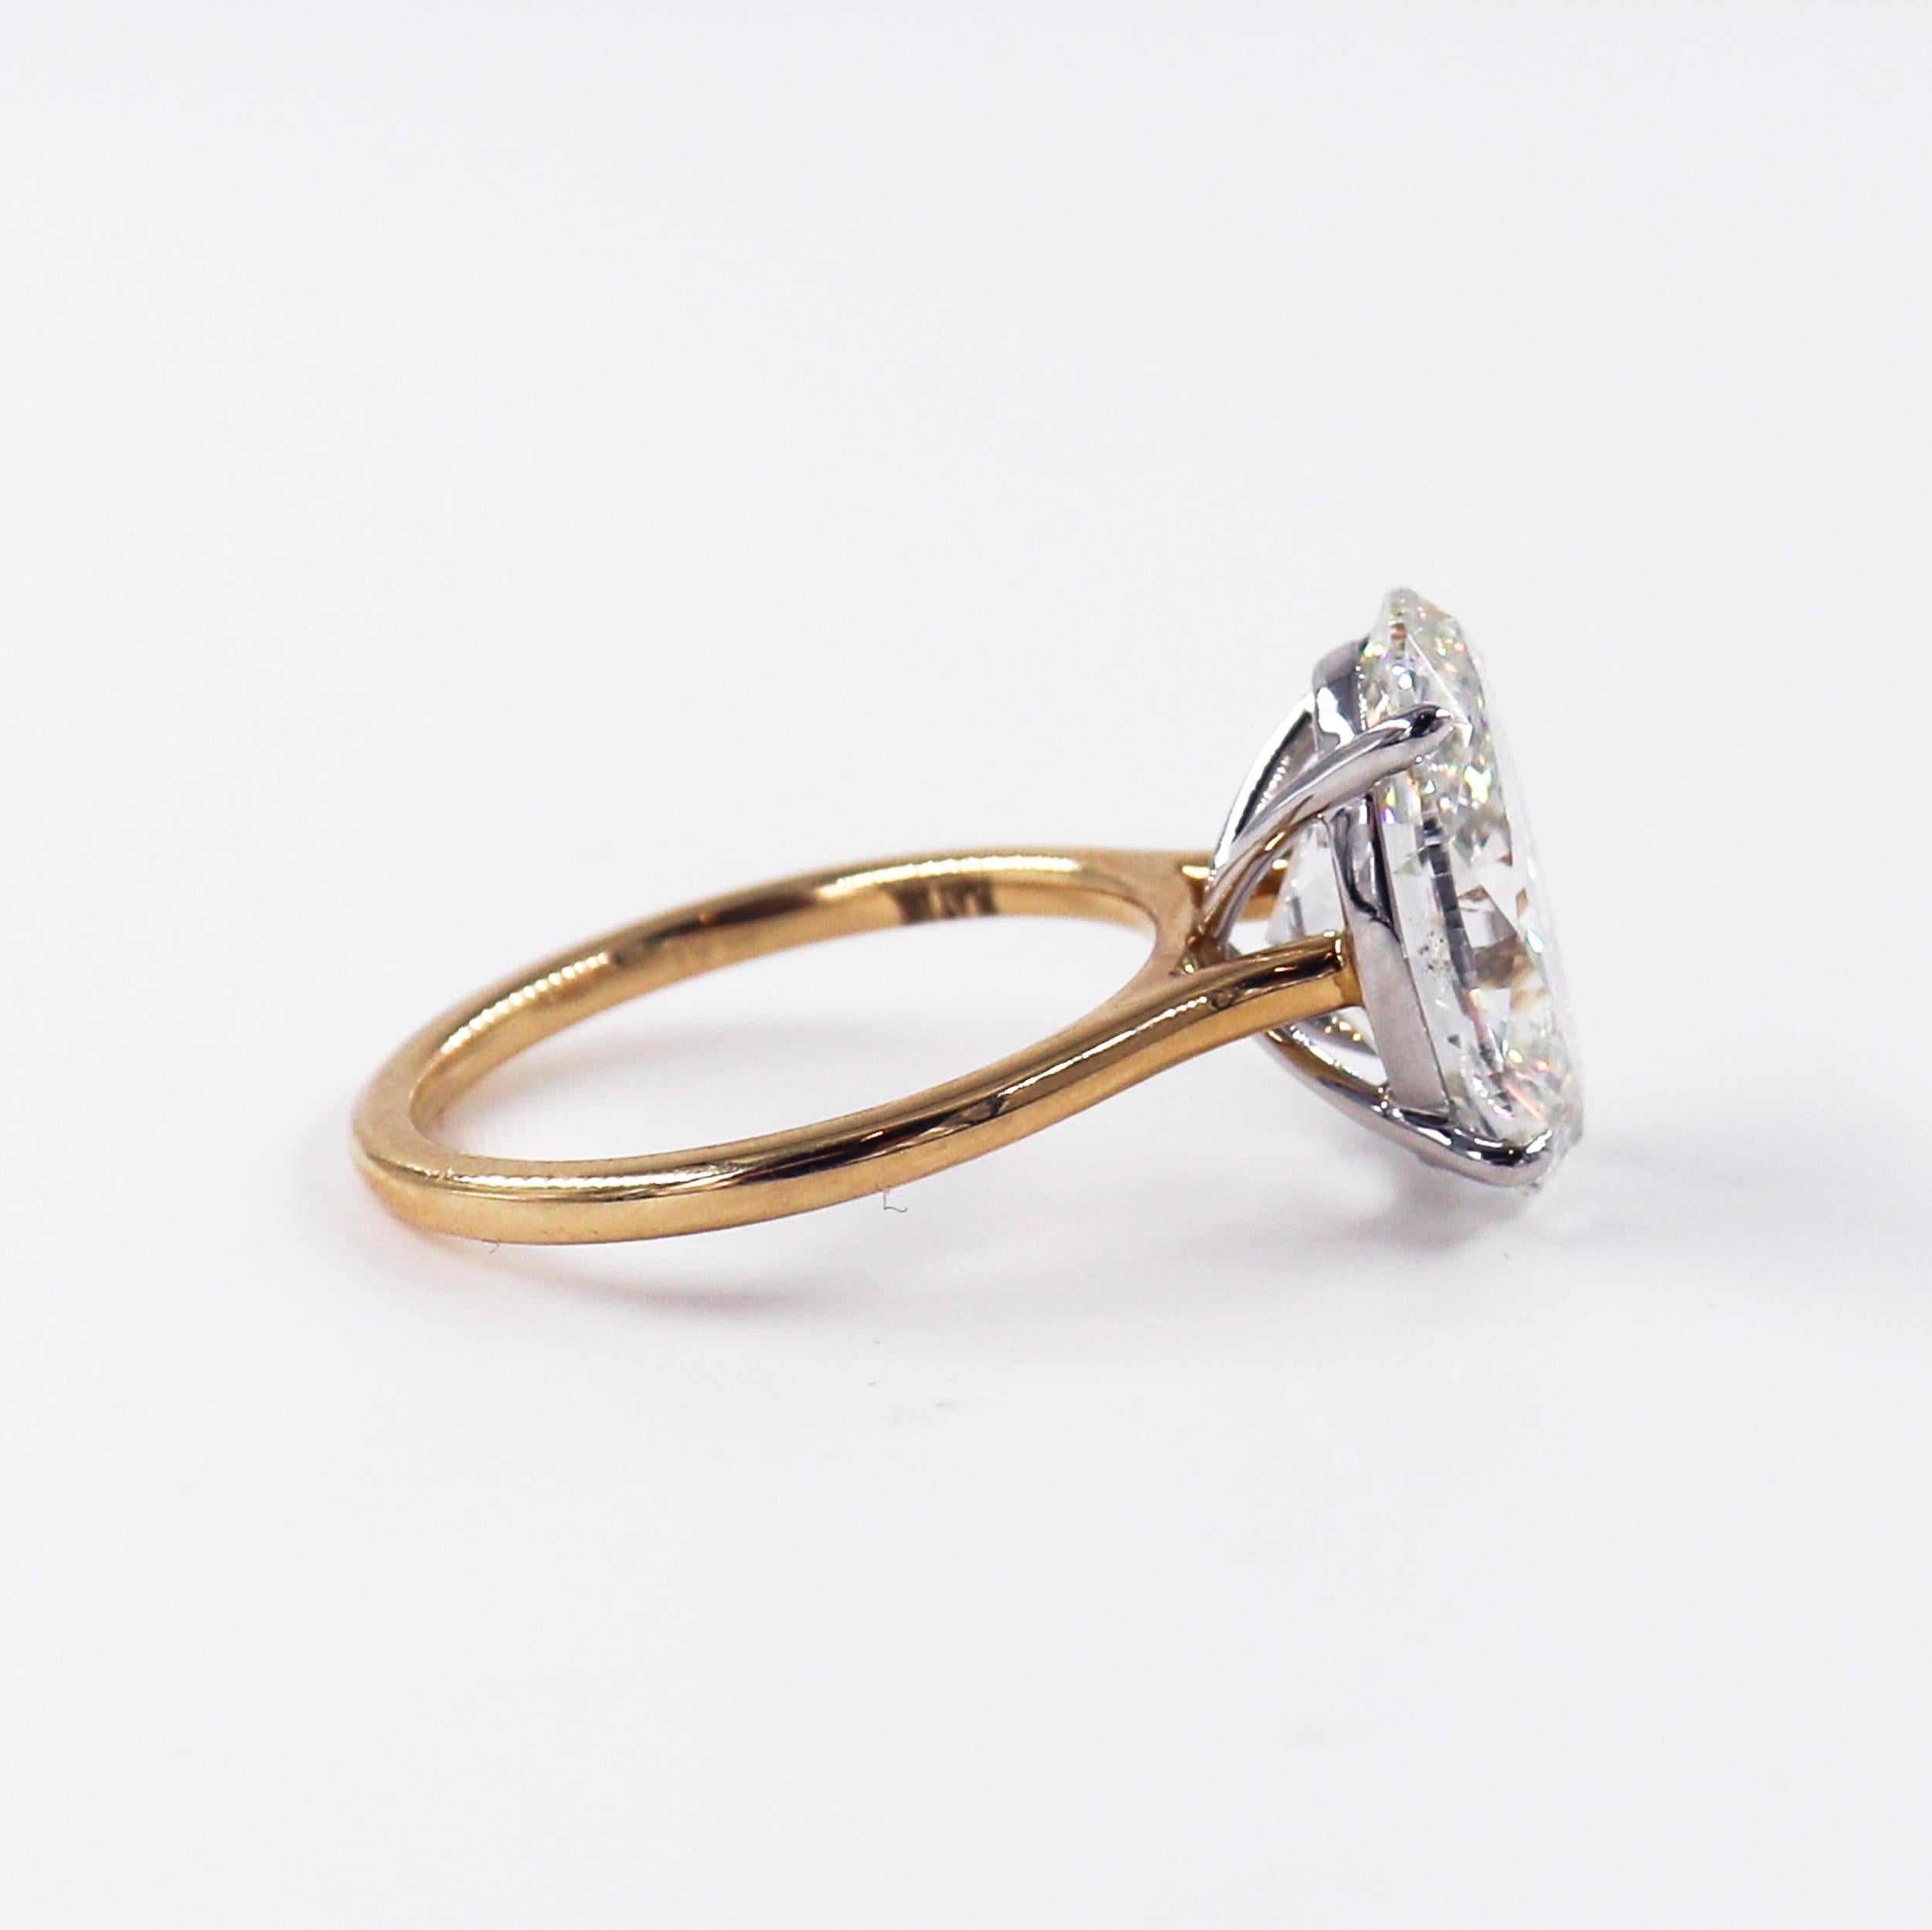 Oval Cut J. Birnbach 5.36 carat GIA Certified I SI2 Oval Diamond Ring